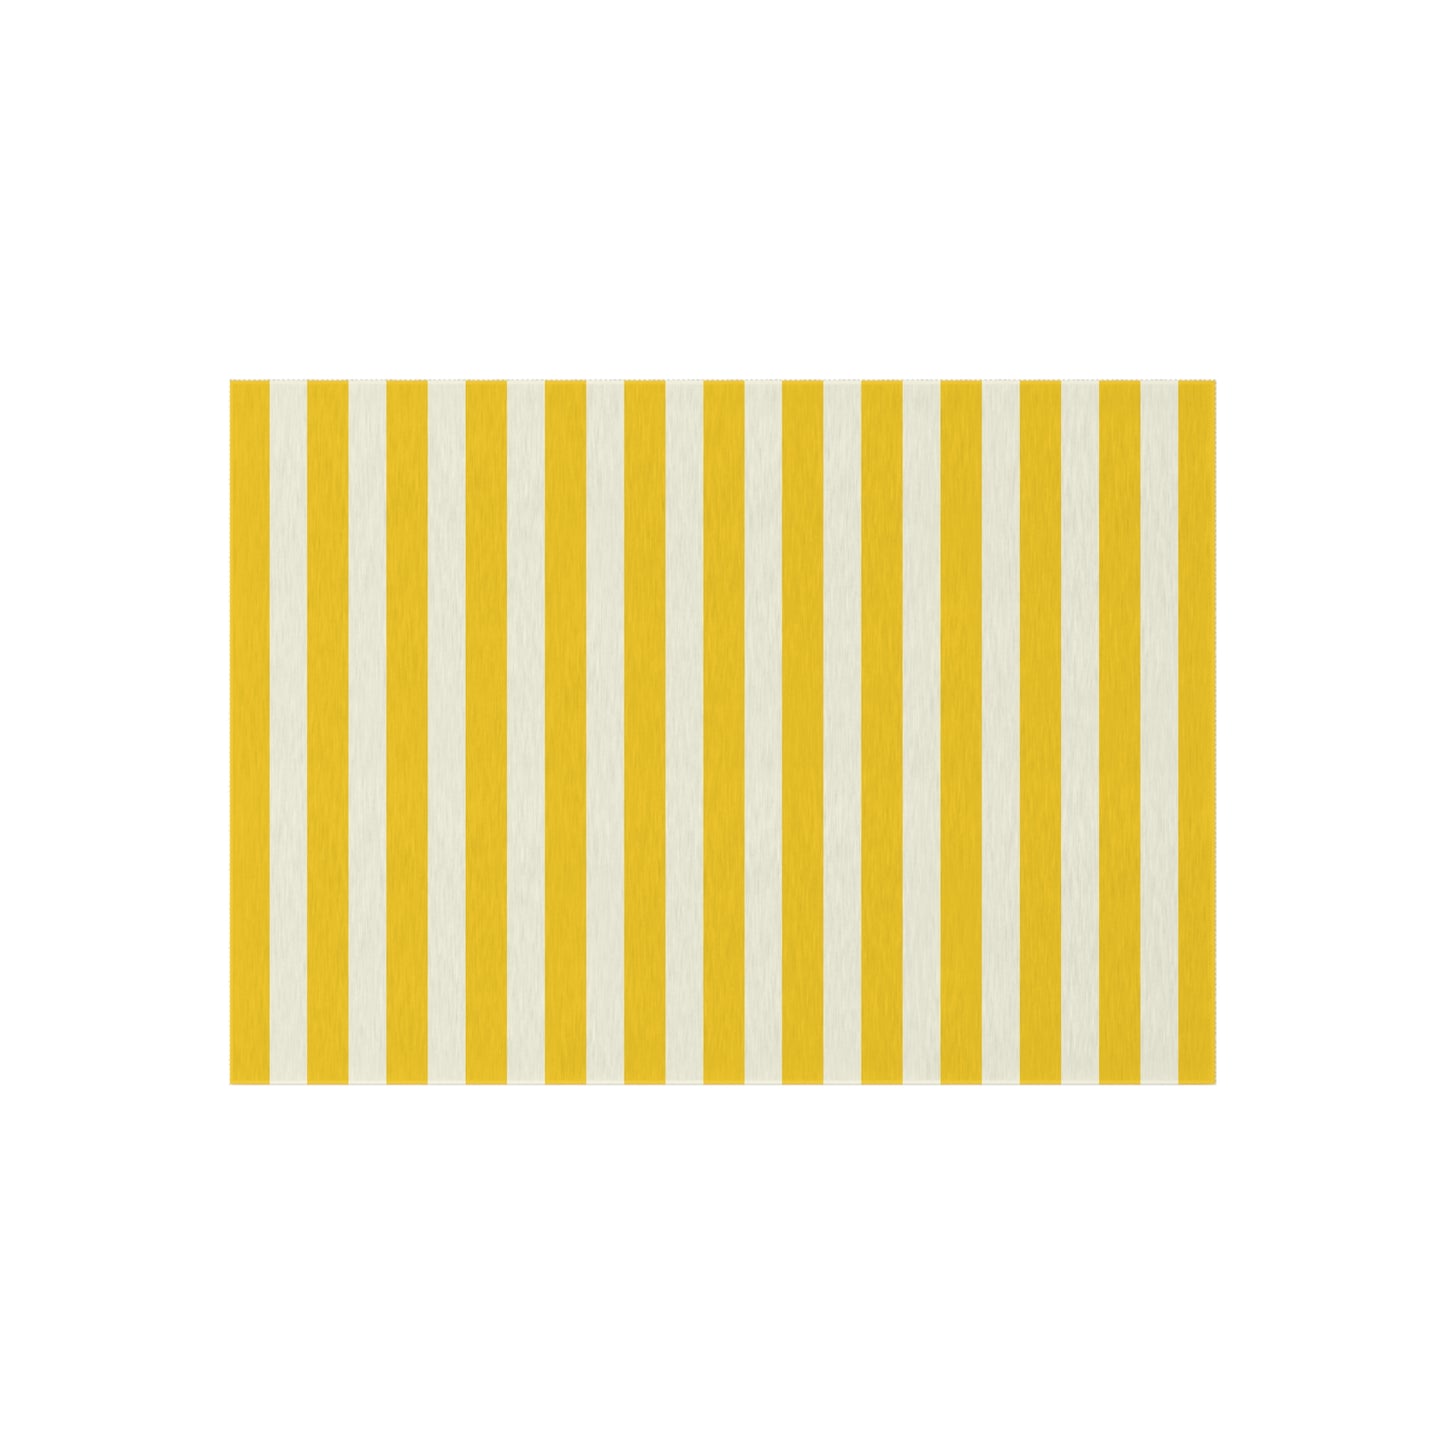 Lemony Yellow Stripes Outdoor Rug